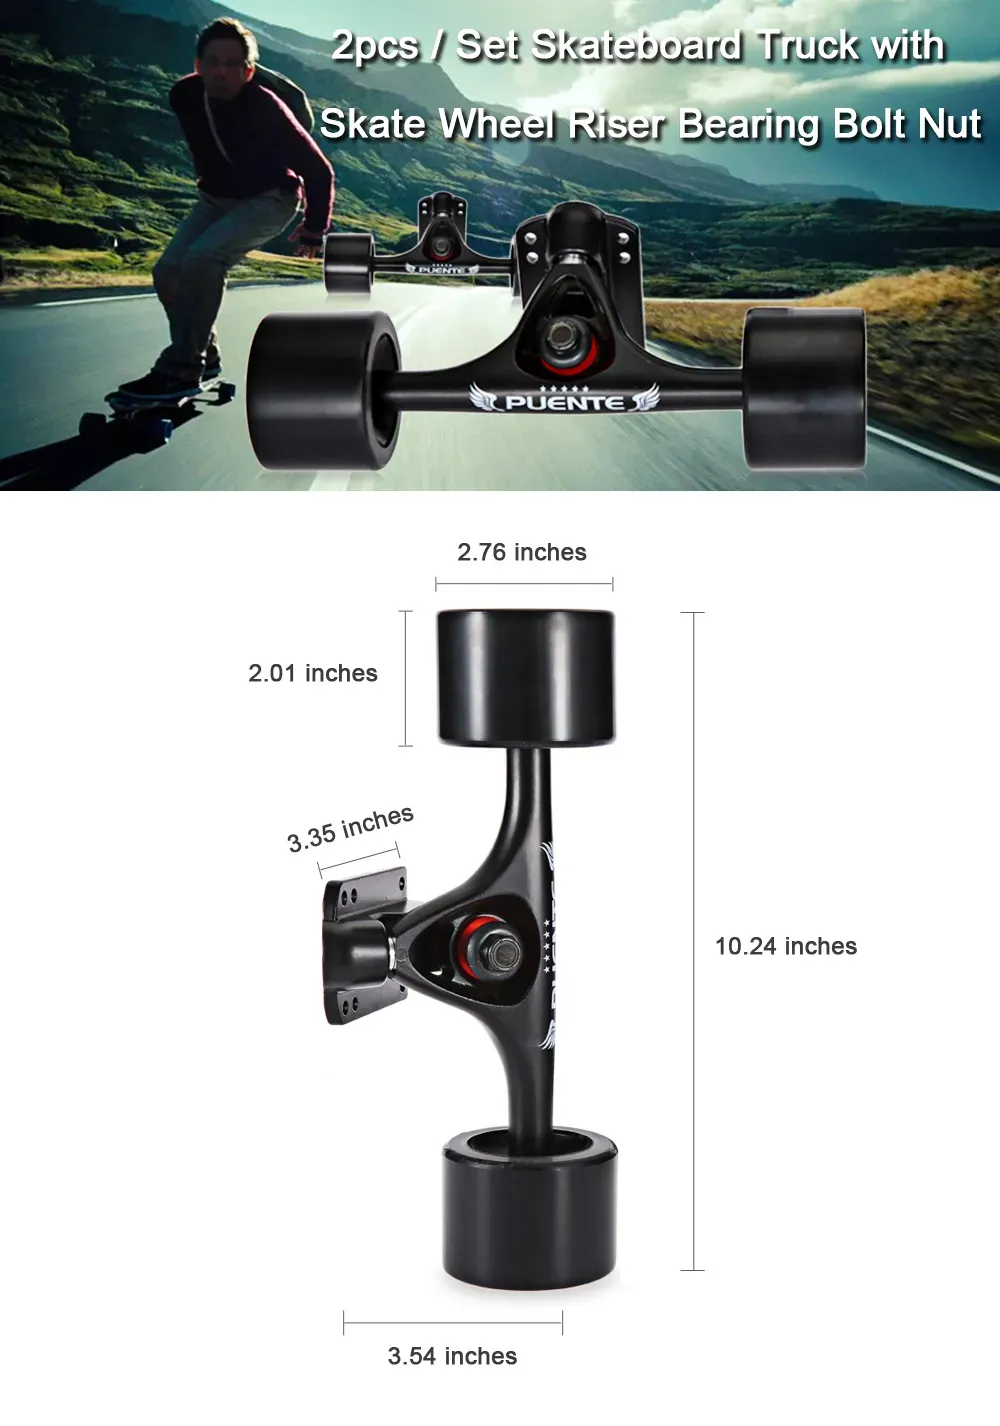 Skateboard Truck with Skate Wheel Riser Pad Bearing Hardware Accessory Installing Tool for Skateboard